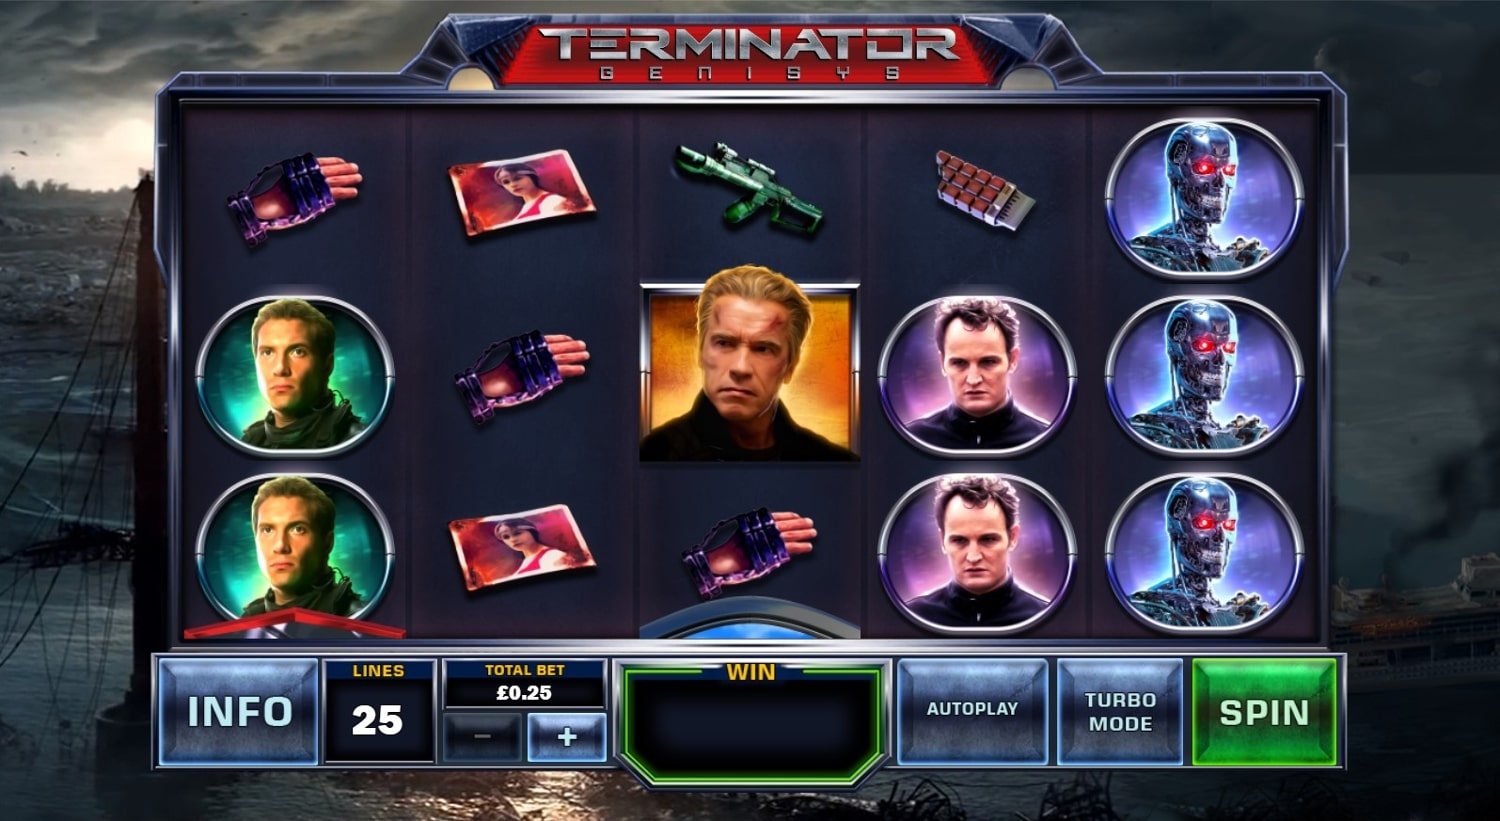 Terminator Genisys Free Spins